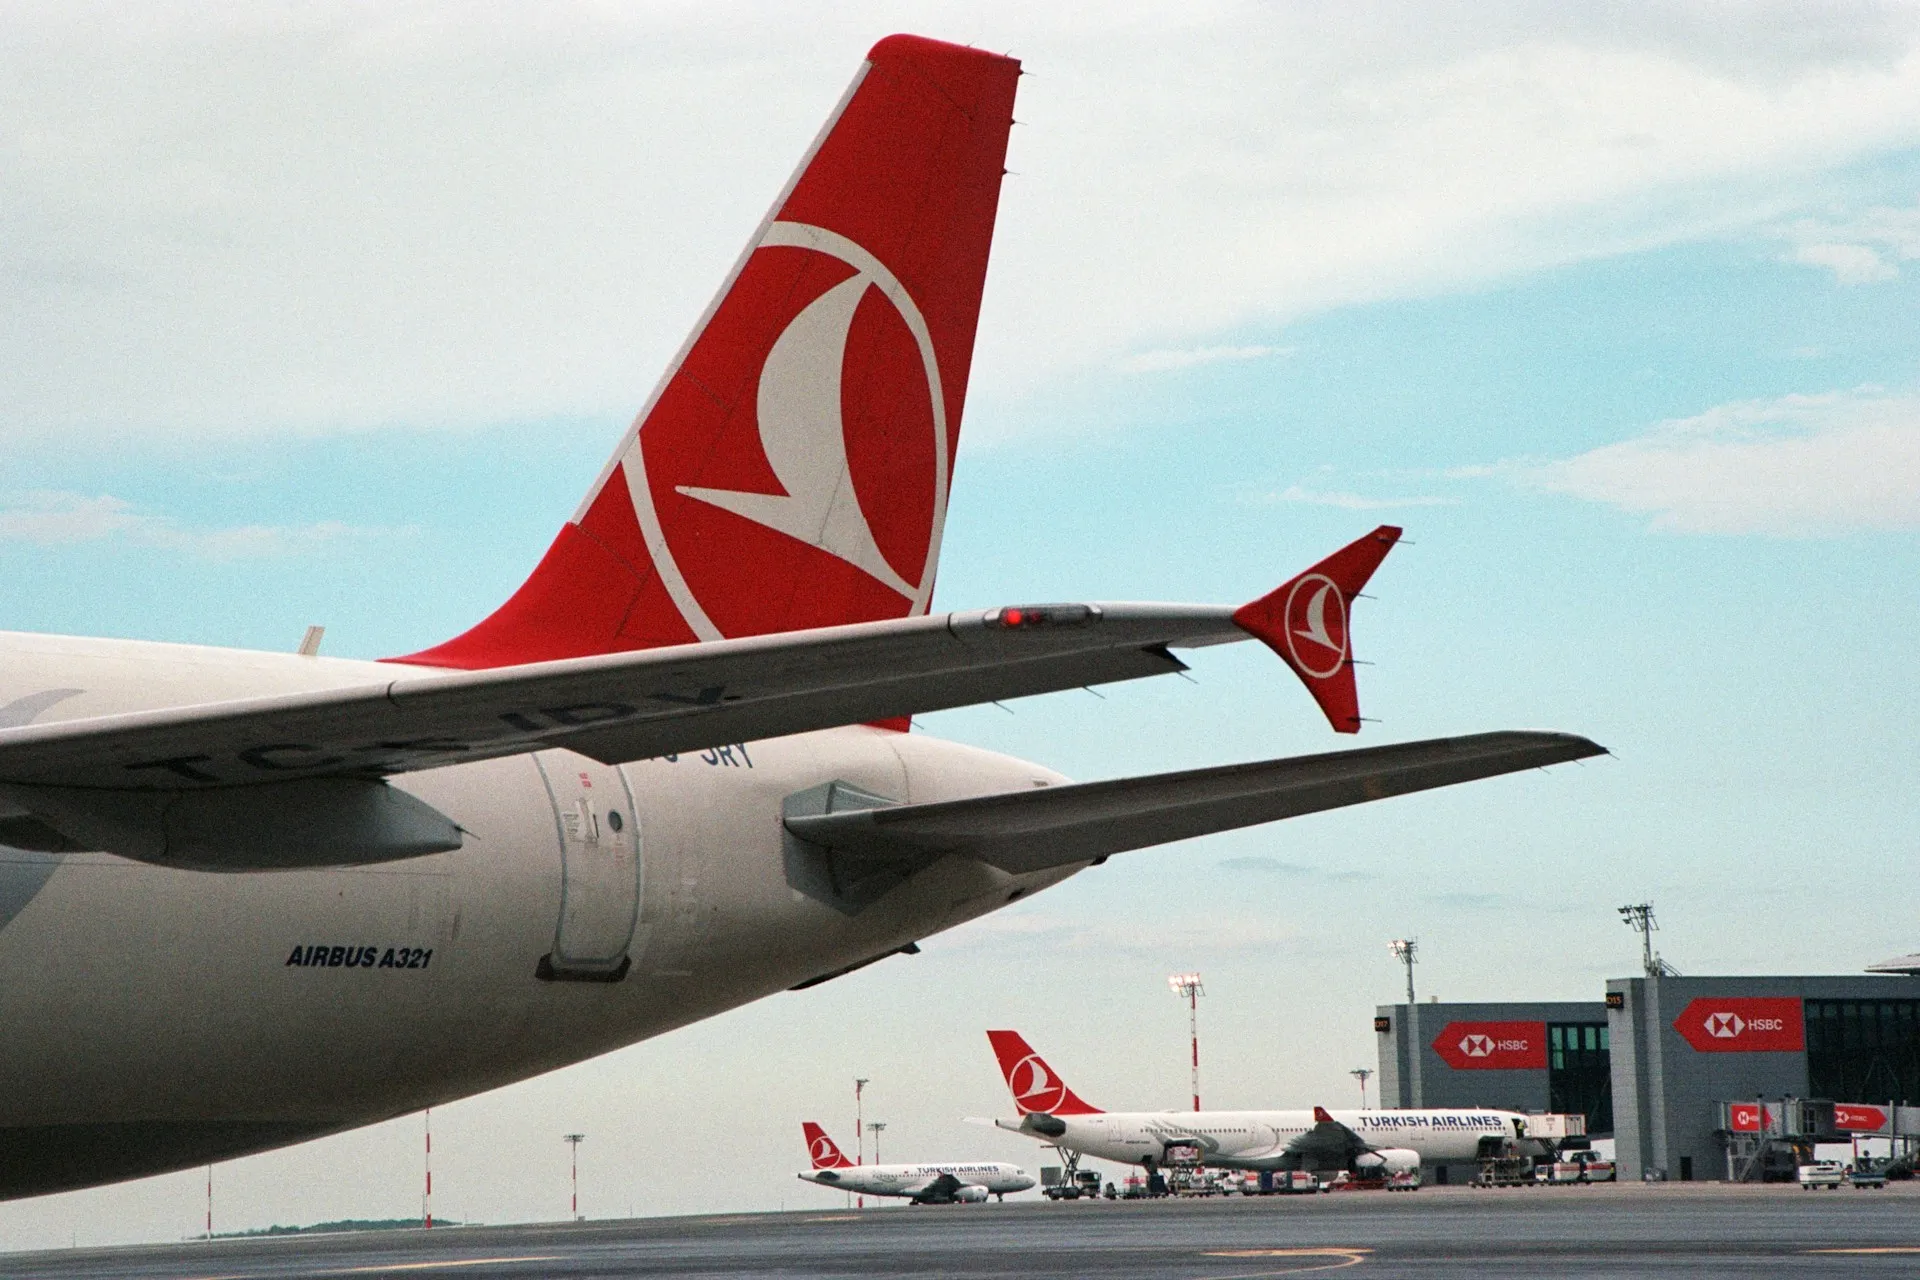 Istanbul Airport. Source: Photo by Onur Kurt on Unsplash